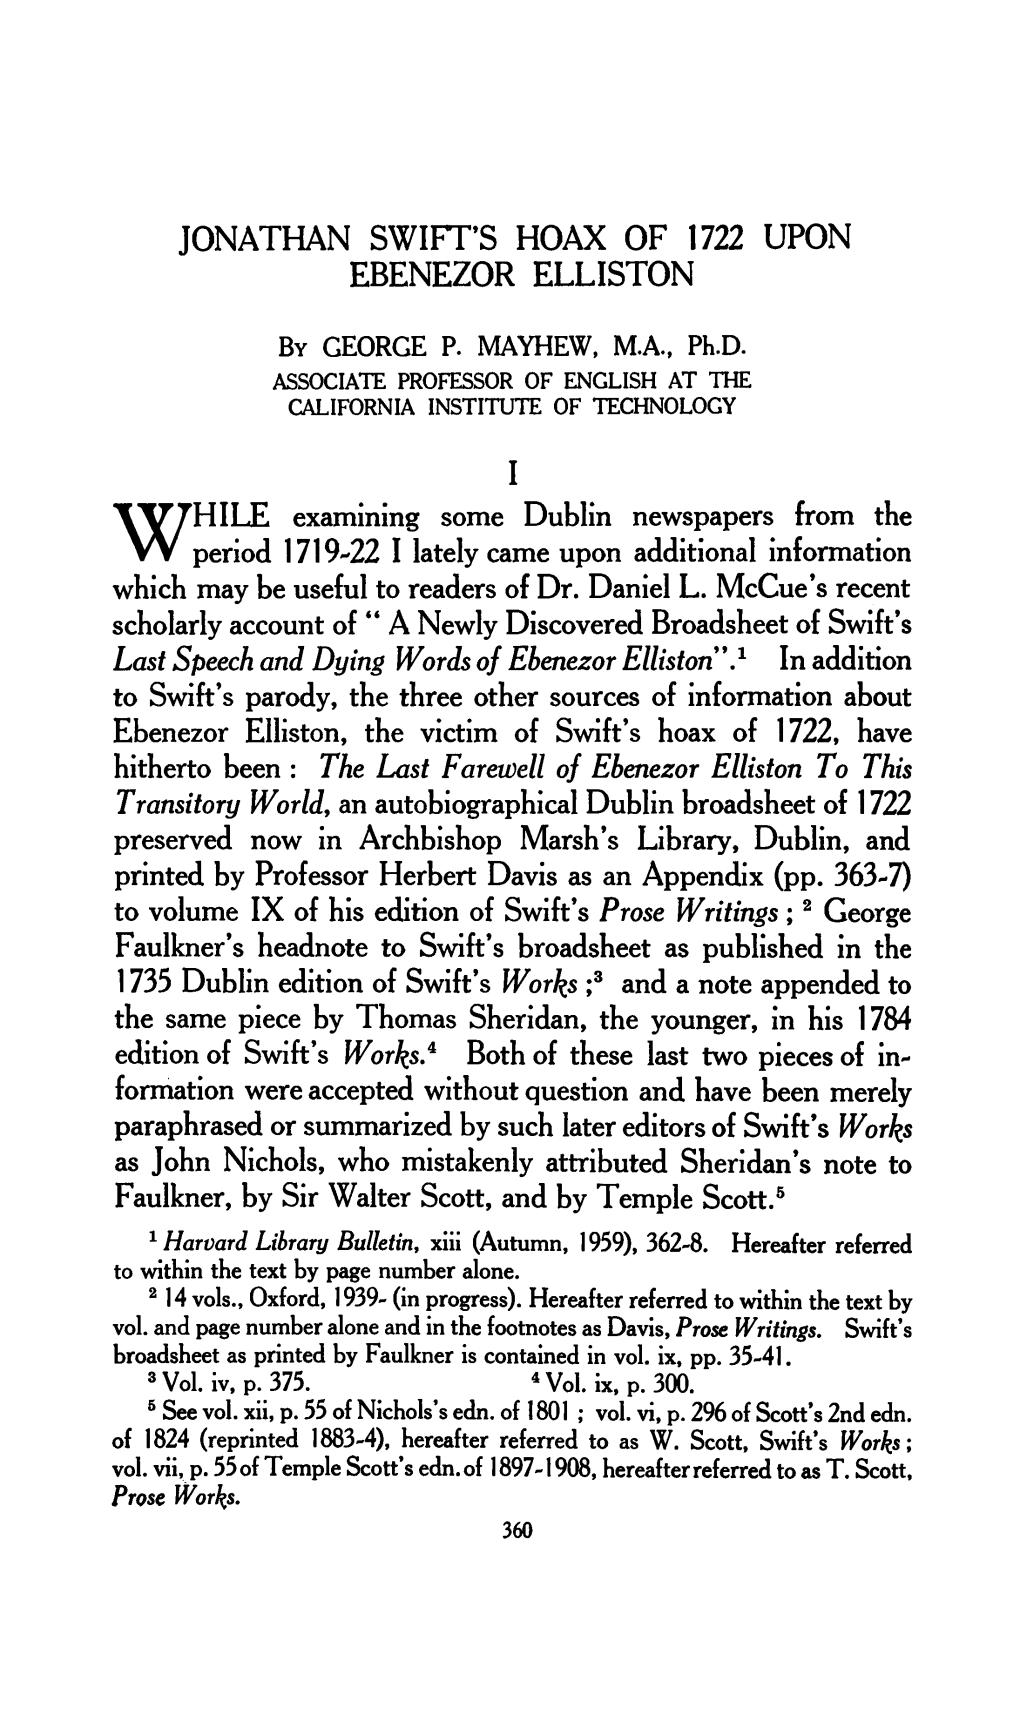 Jonathan Swift's Hoax of 1722 Upon Ebenezor Elliston